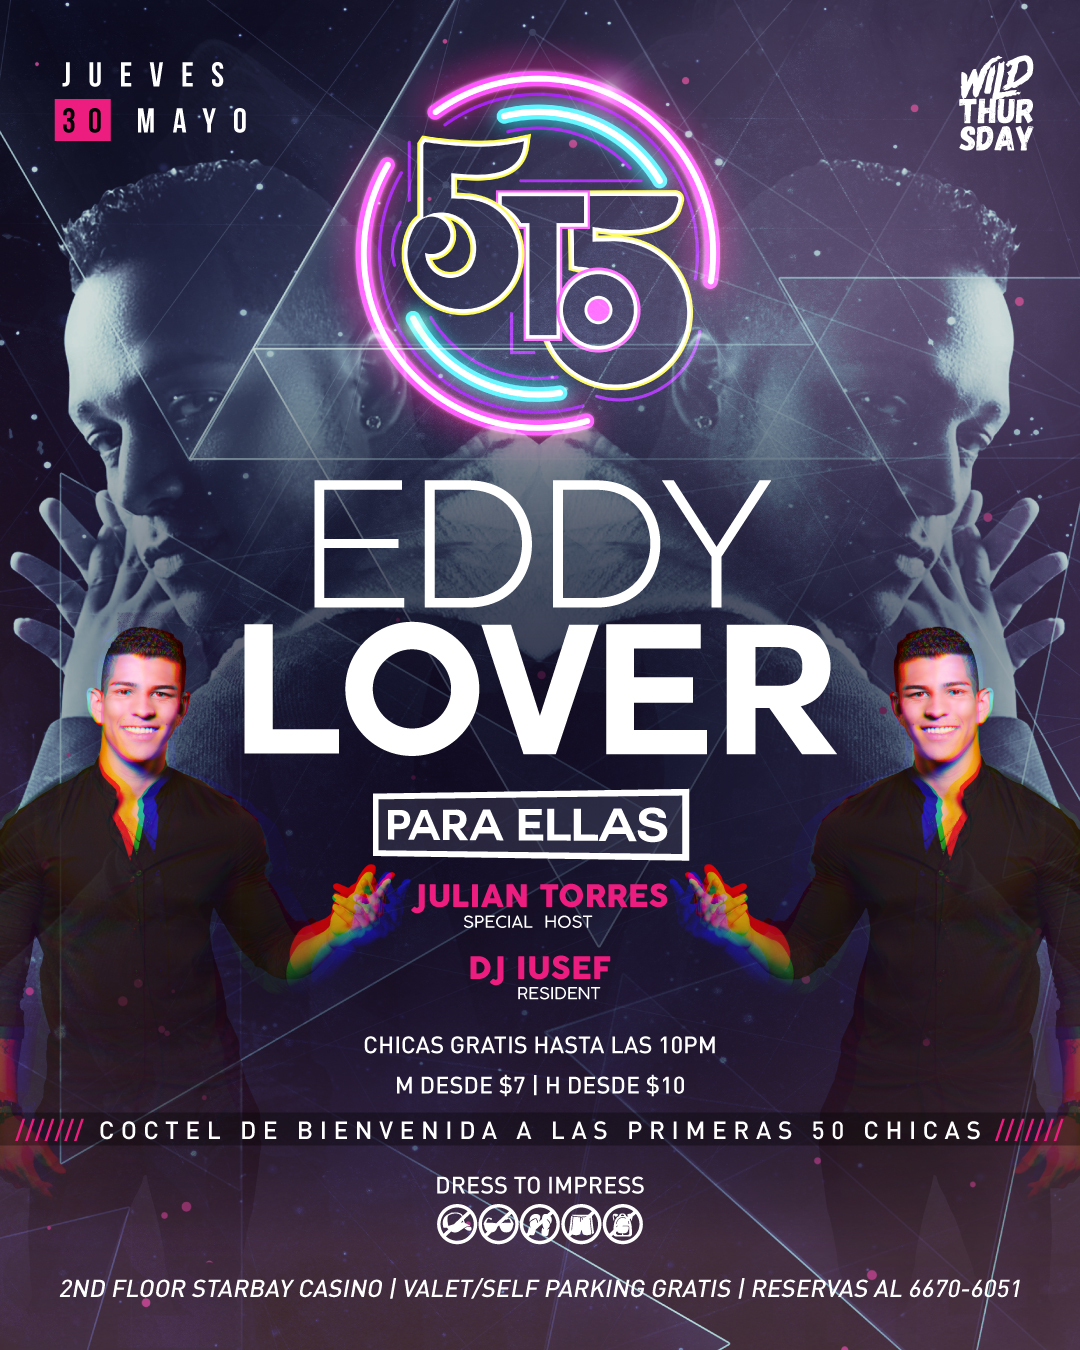 Photo of ‘Eddy Lover’ estará en 5to5 Panamá